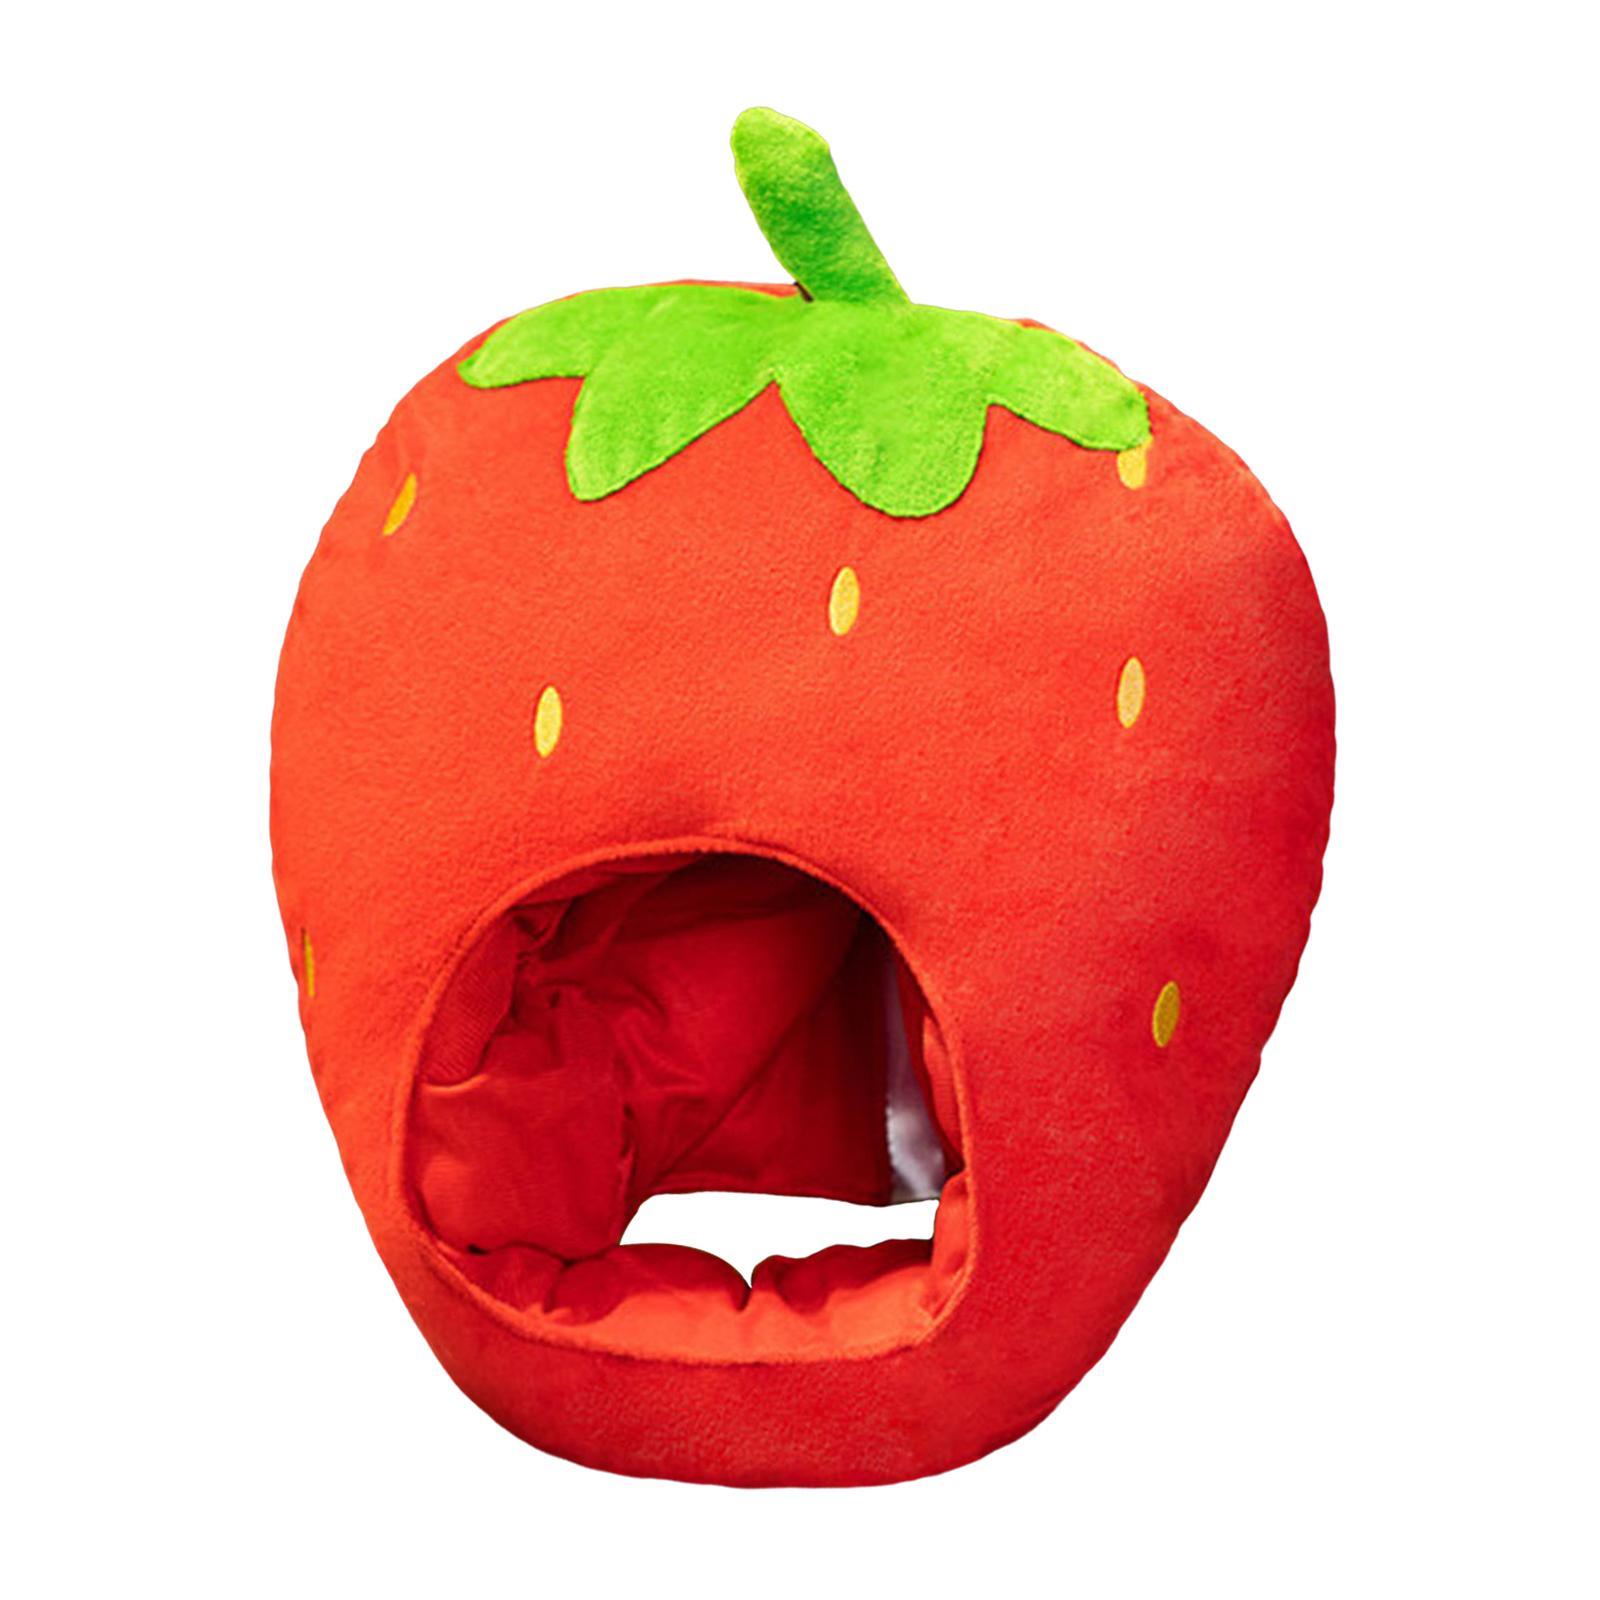 Funny Strawberry Hat Cartoon Novelty Headdress for Cosplay Role Play Holiday